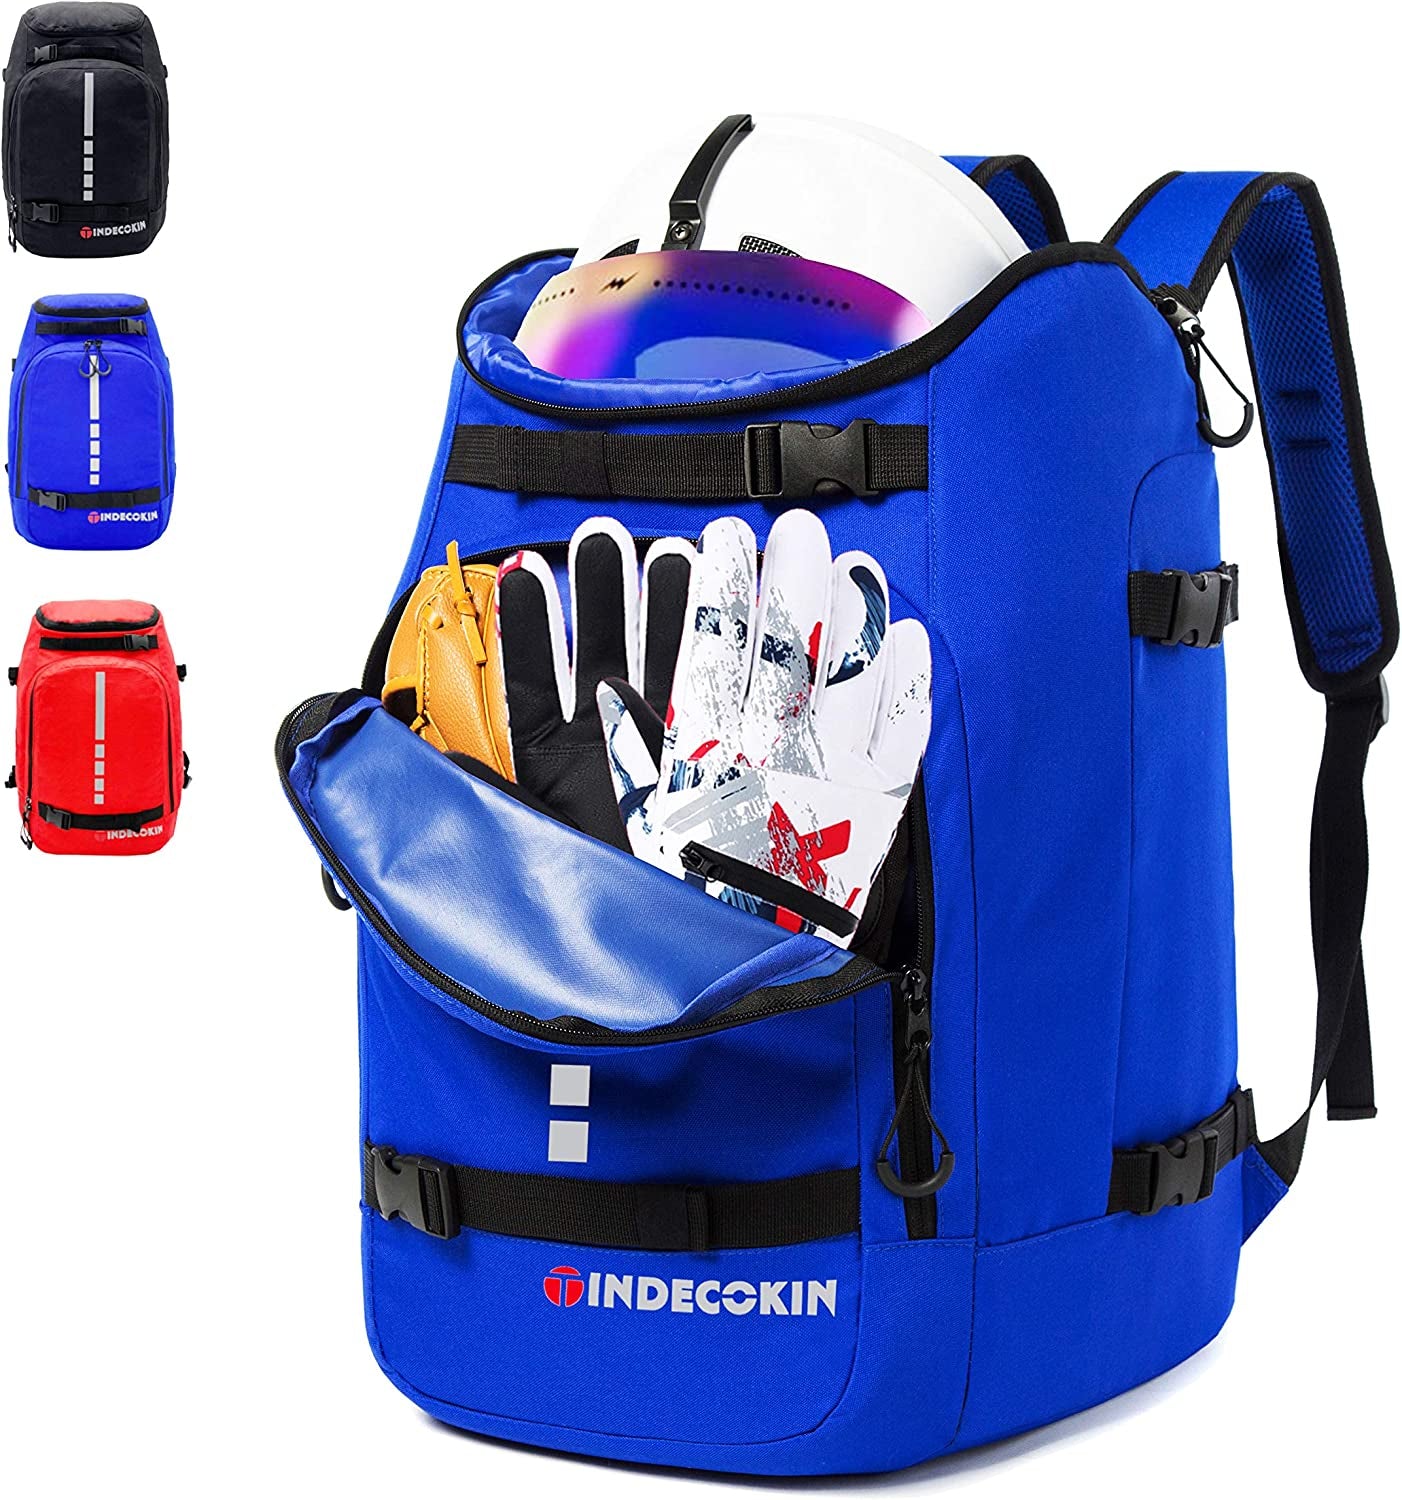 Qiaoqii Ski Boot Bag, Ski and Ski Boot Travel Backpack, 50L Large Capacity Can Accommodate Ski Helmet, Goggles, Gloves, Snowboard and Other Accessories